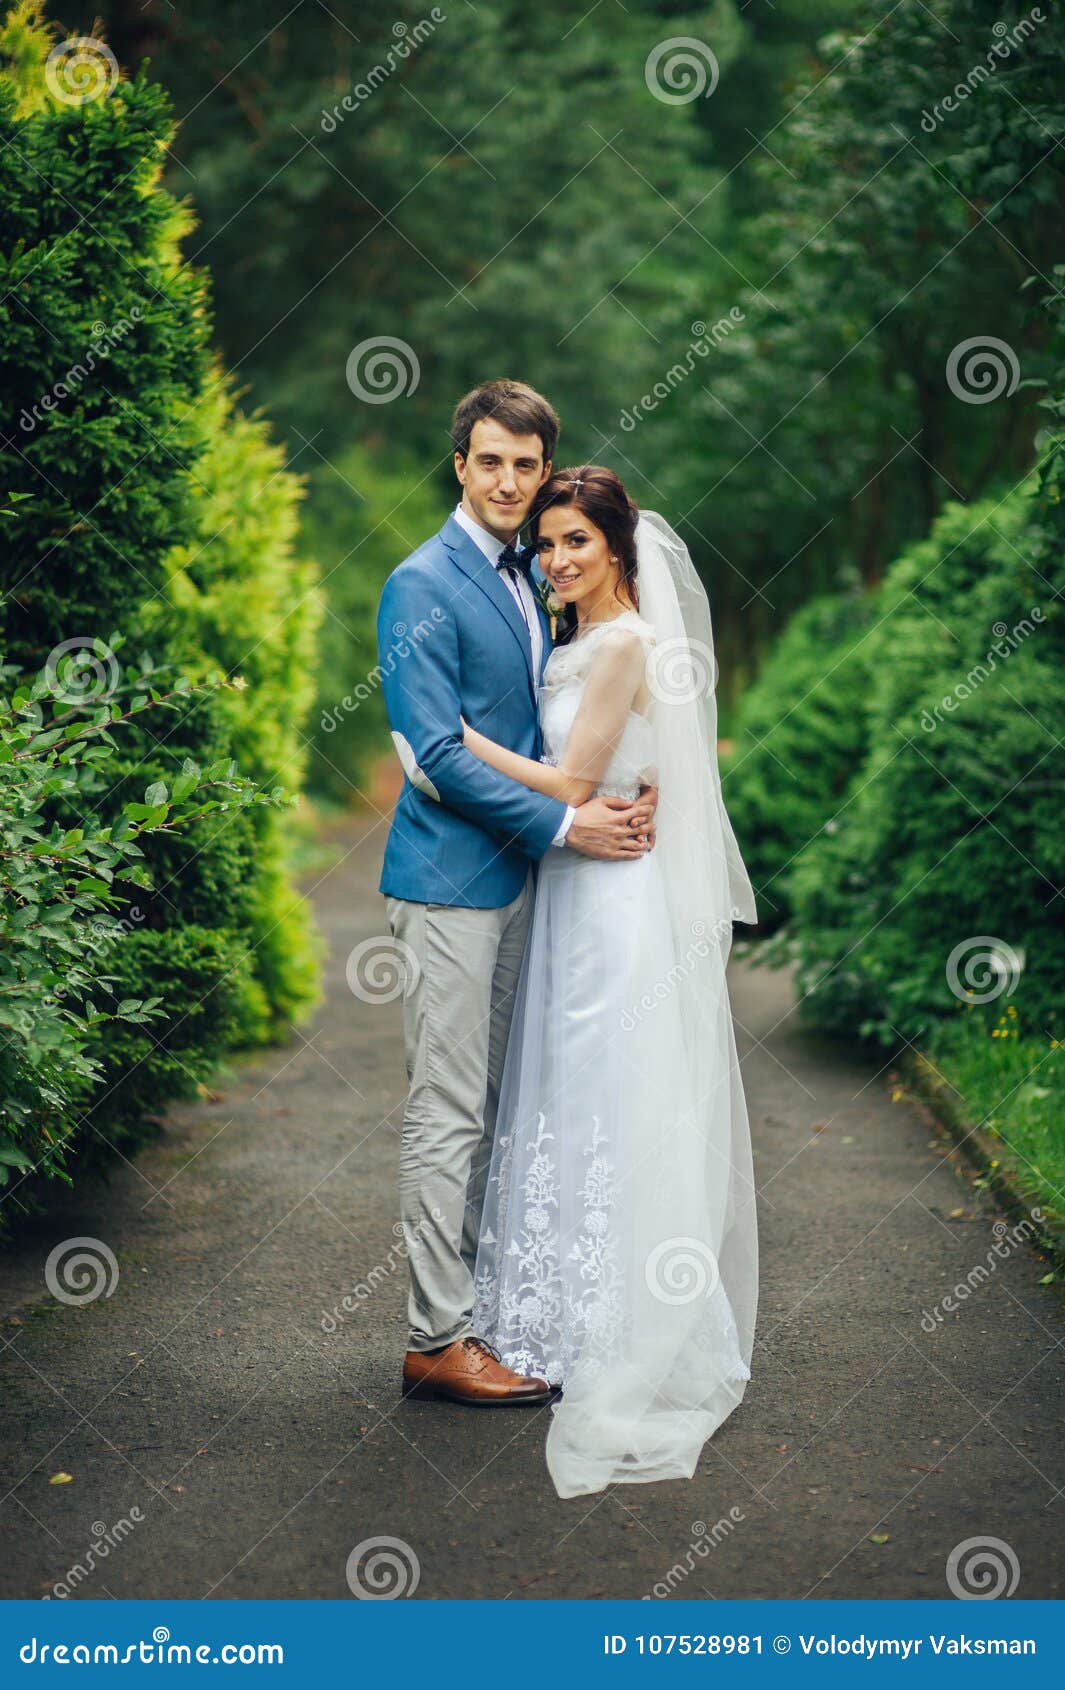 13+ Romantic Couple Poses Ideas for Wedding Photography - Chitrkala